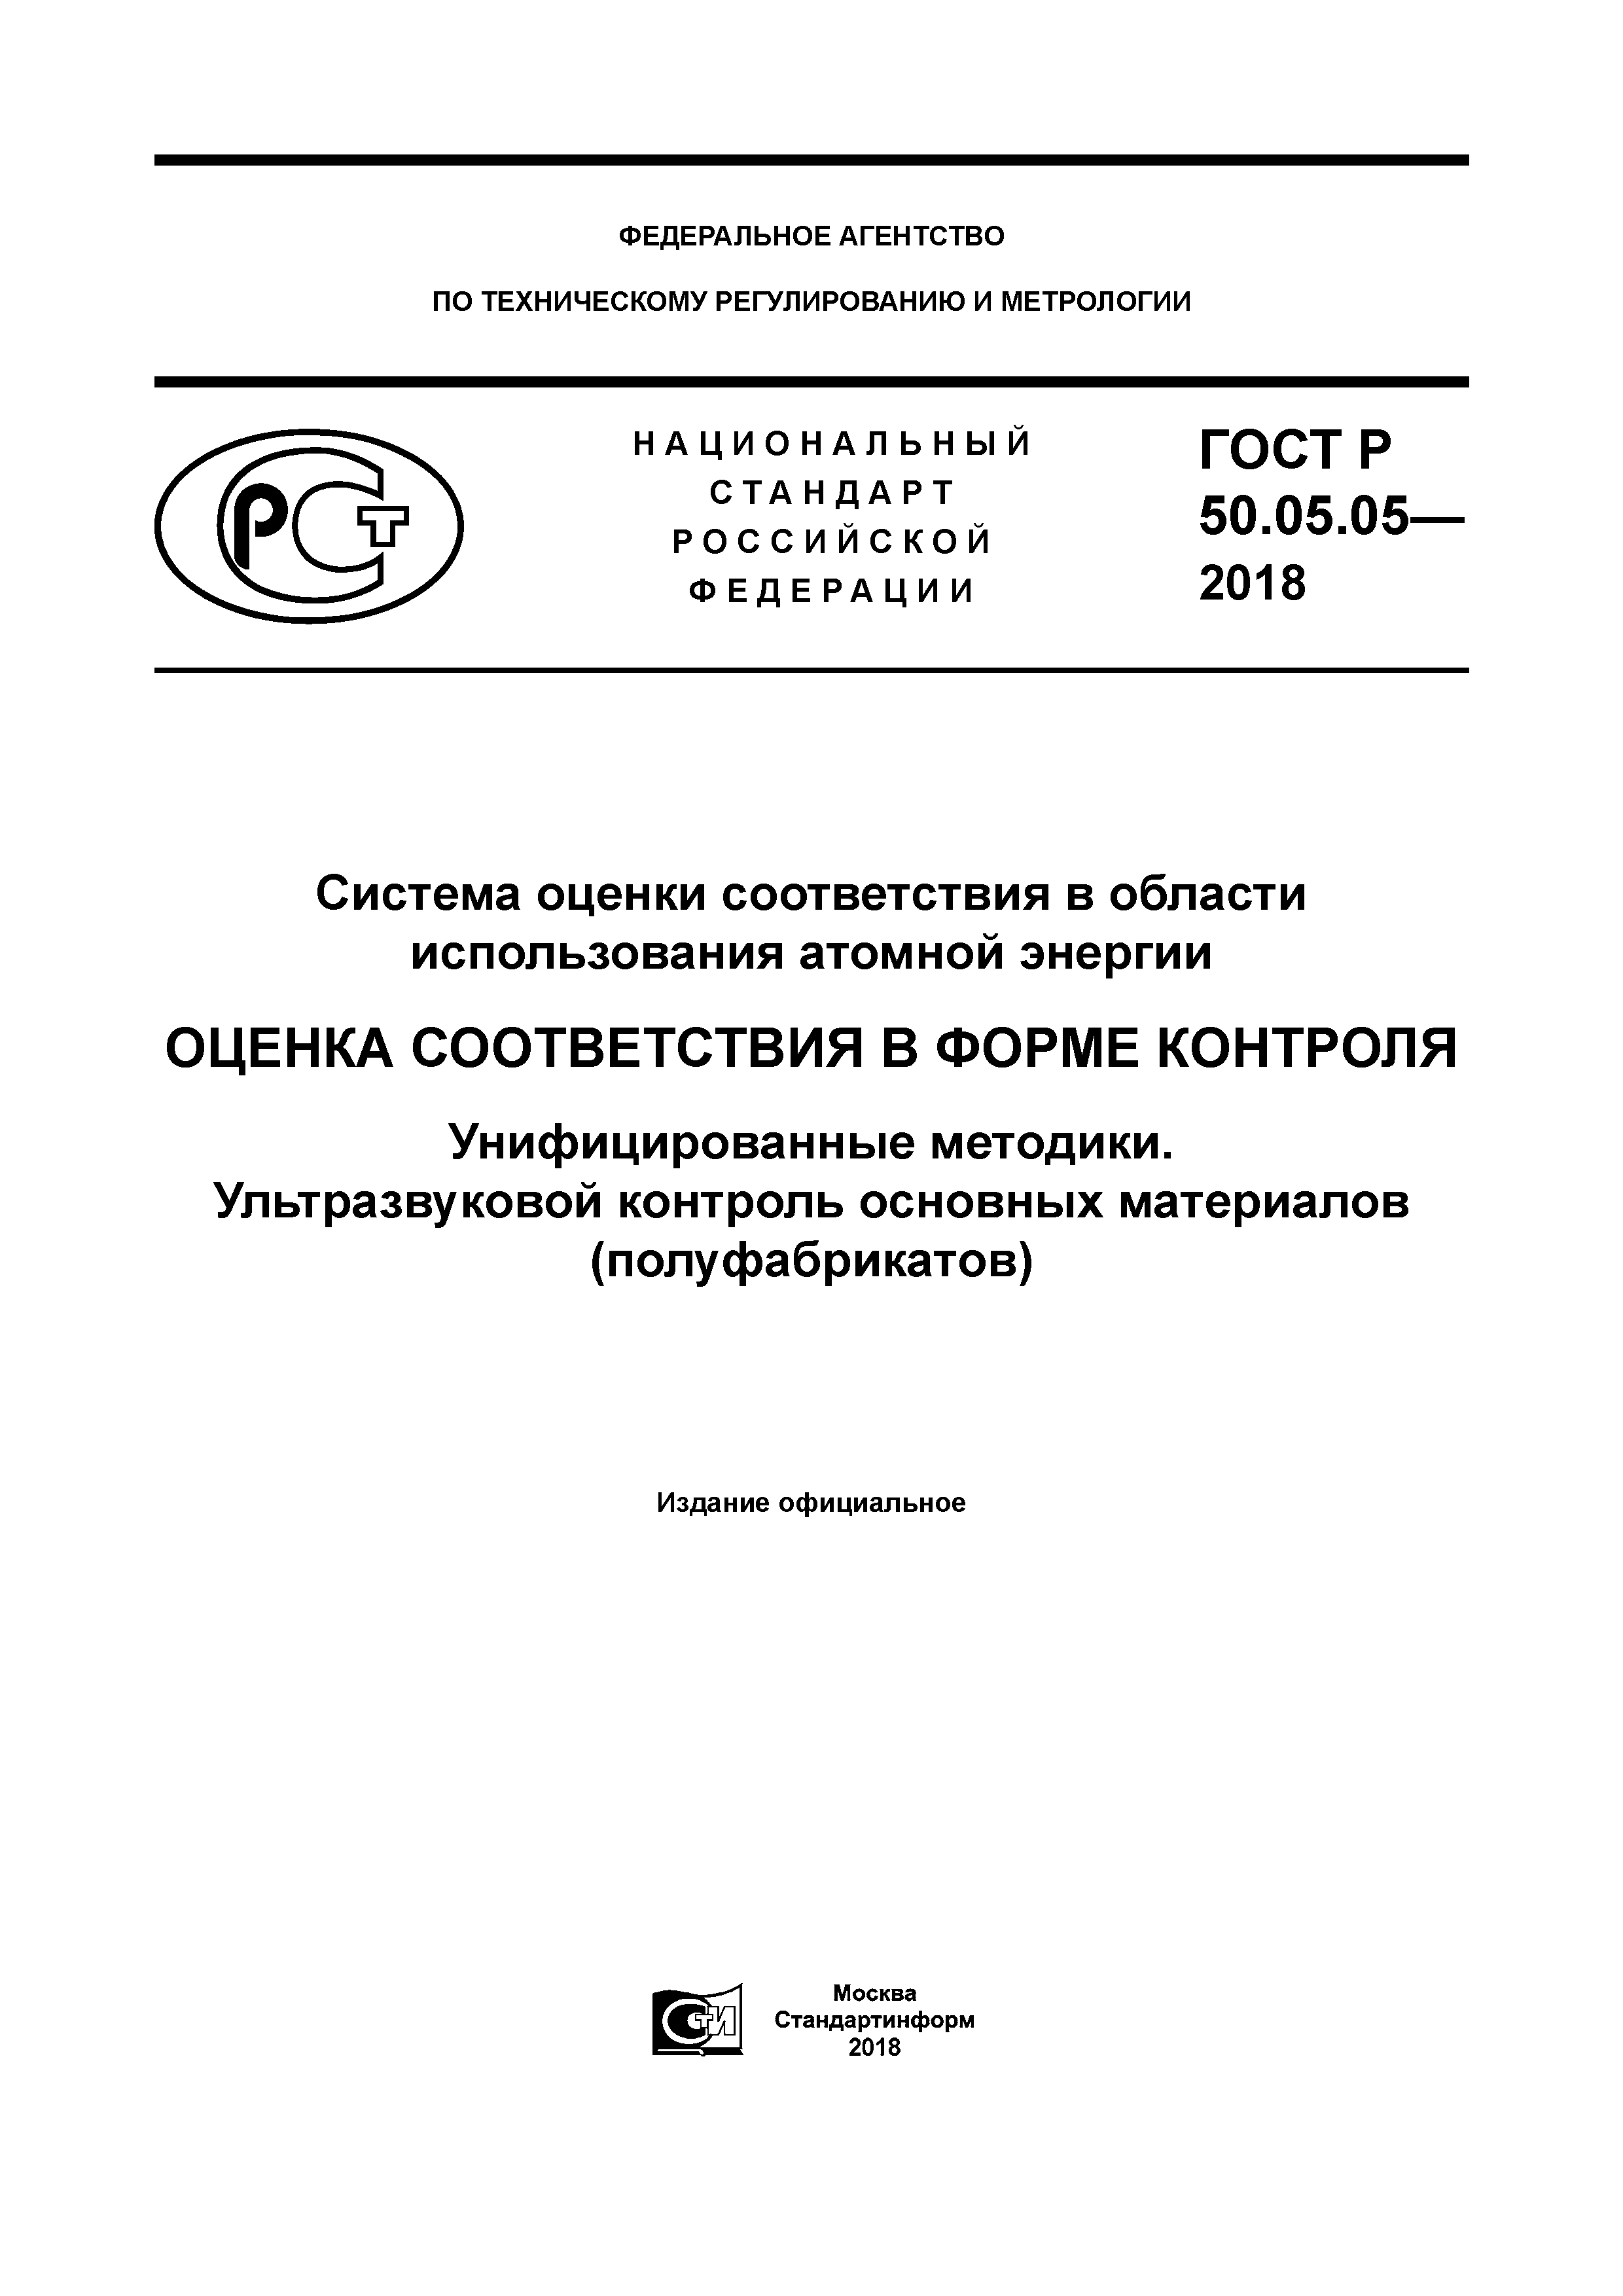 ГОСТ Р 50.05.05-2018